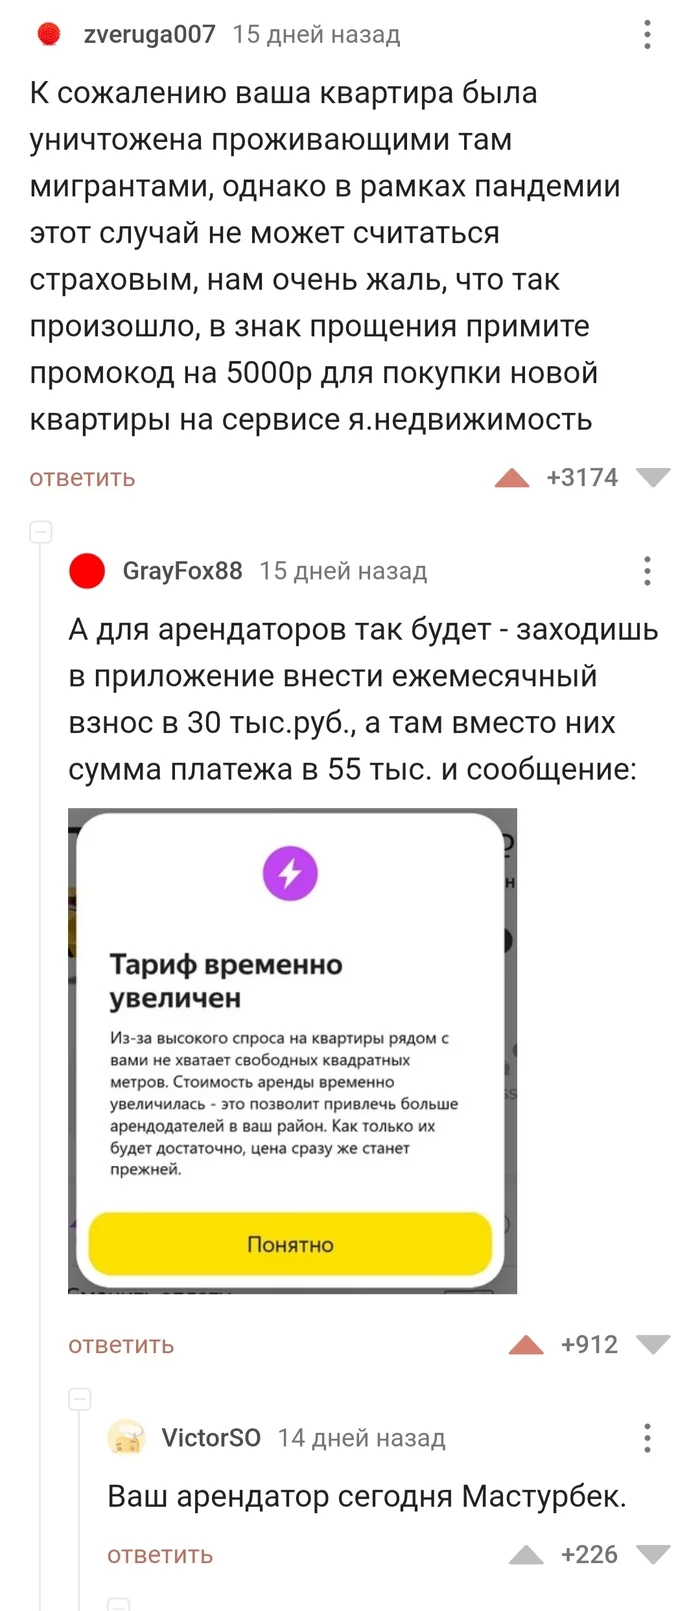 Yandex Rent. Realities - Comments on Peekaboo, Screenshot, Yandex Rent, Yandex., Longpost